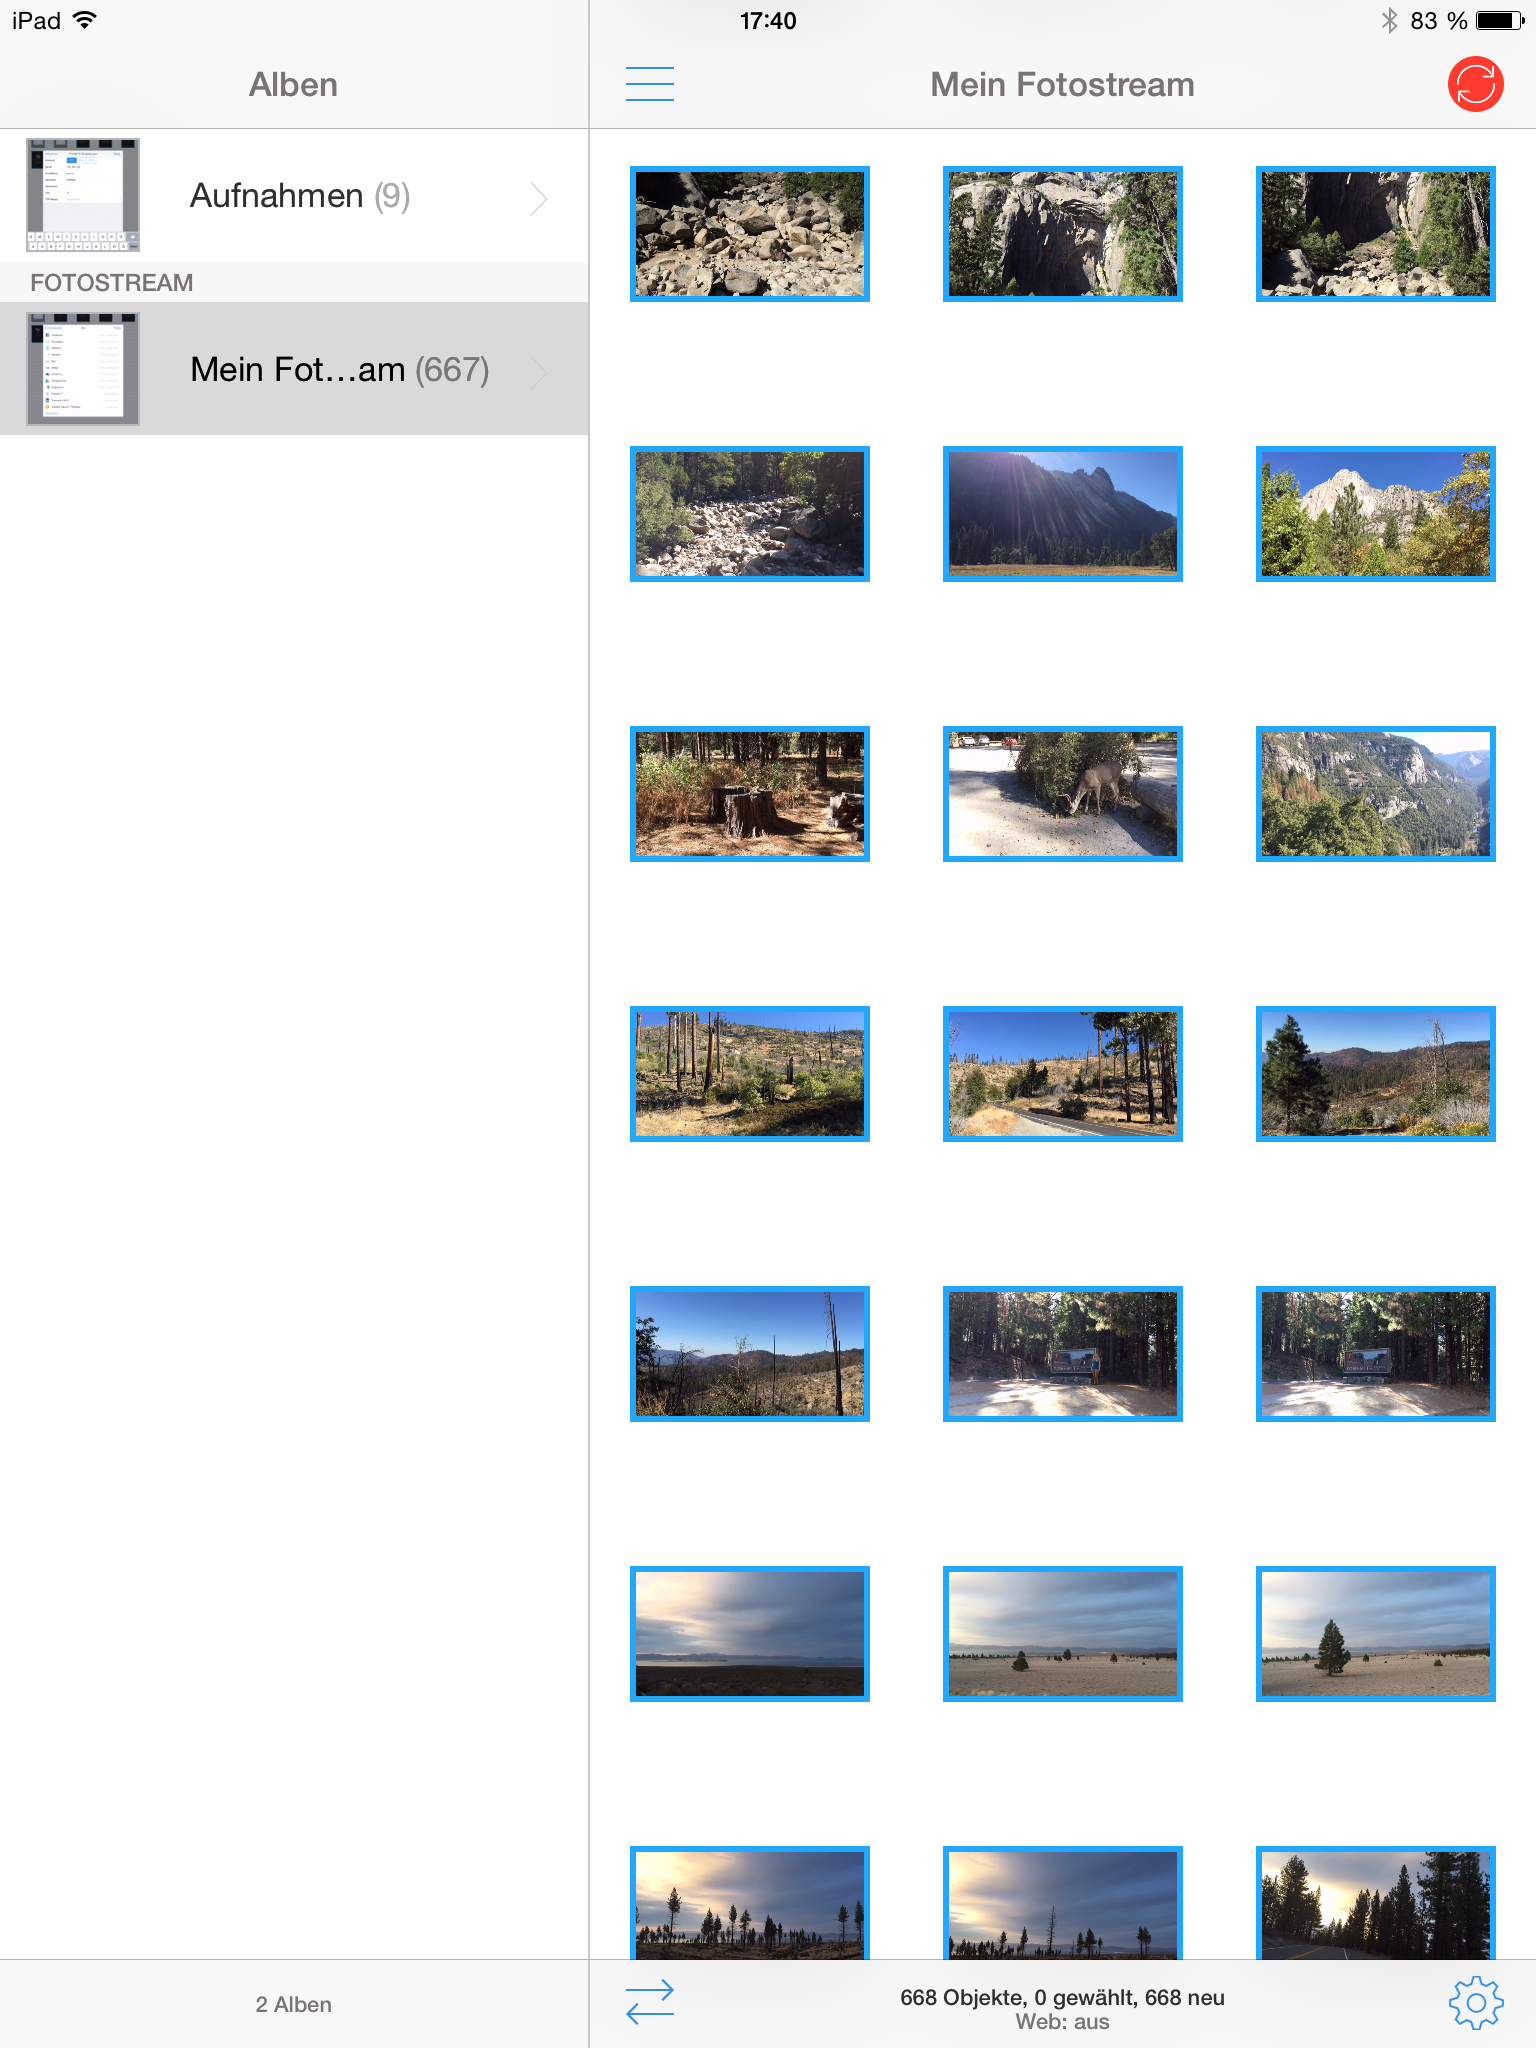 iOS (iPhone + iPad) - Bilder ohne iTunes per WLAN syncronisieren 7